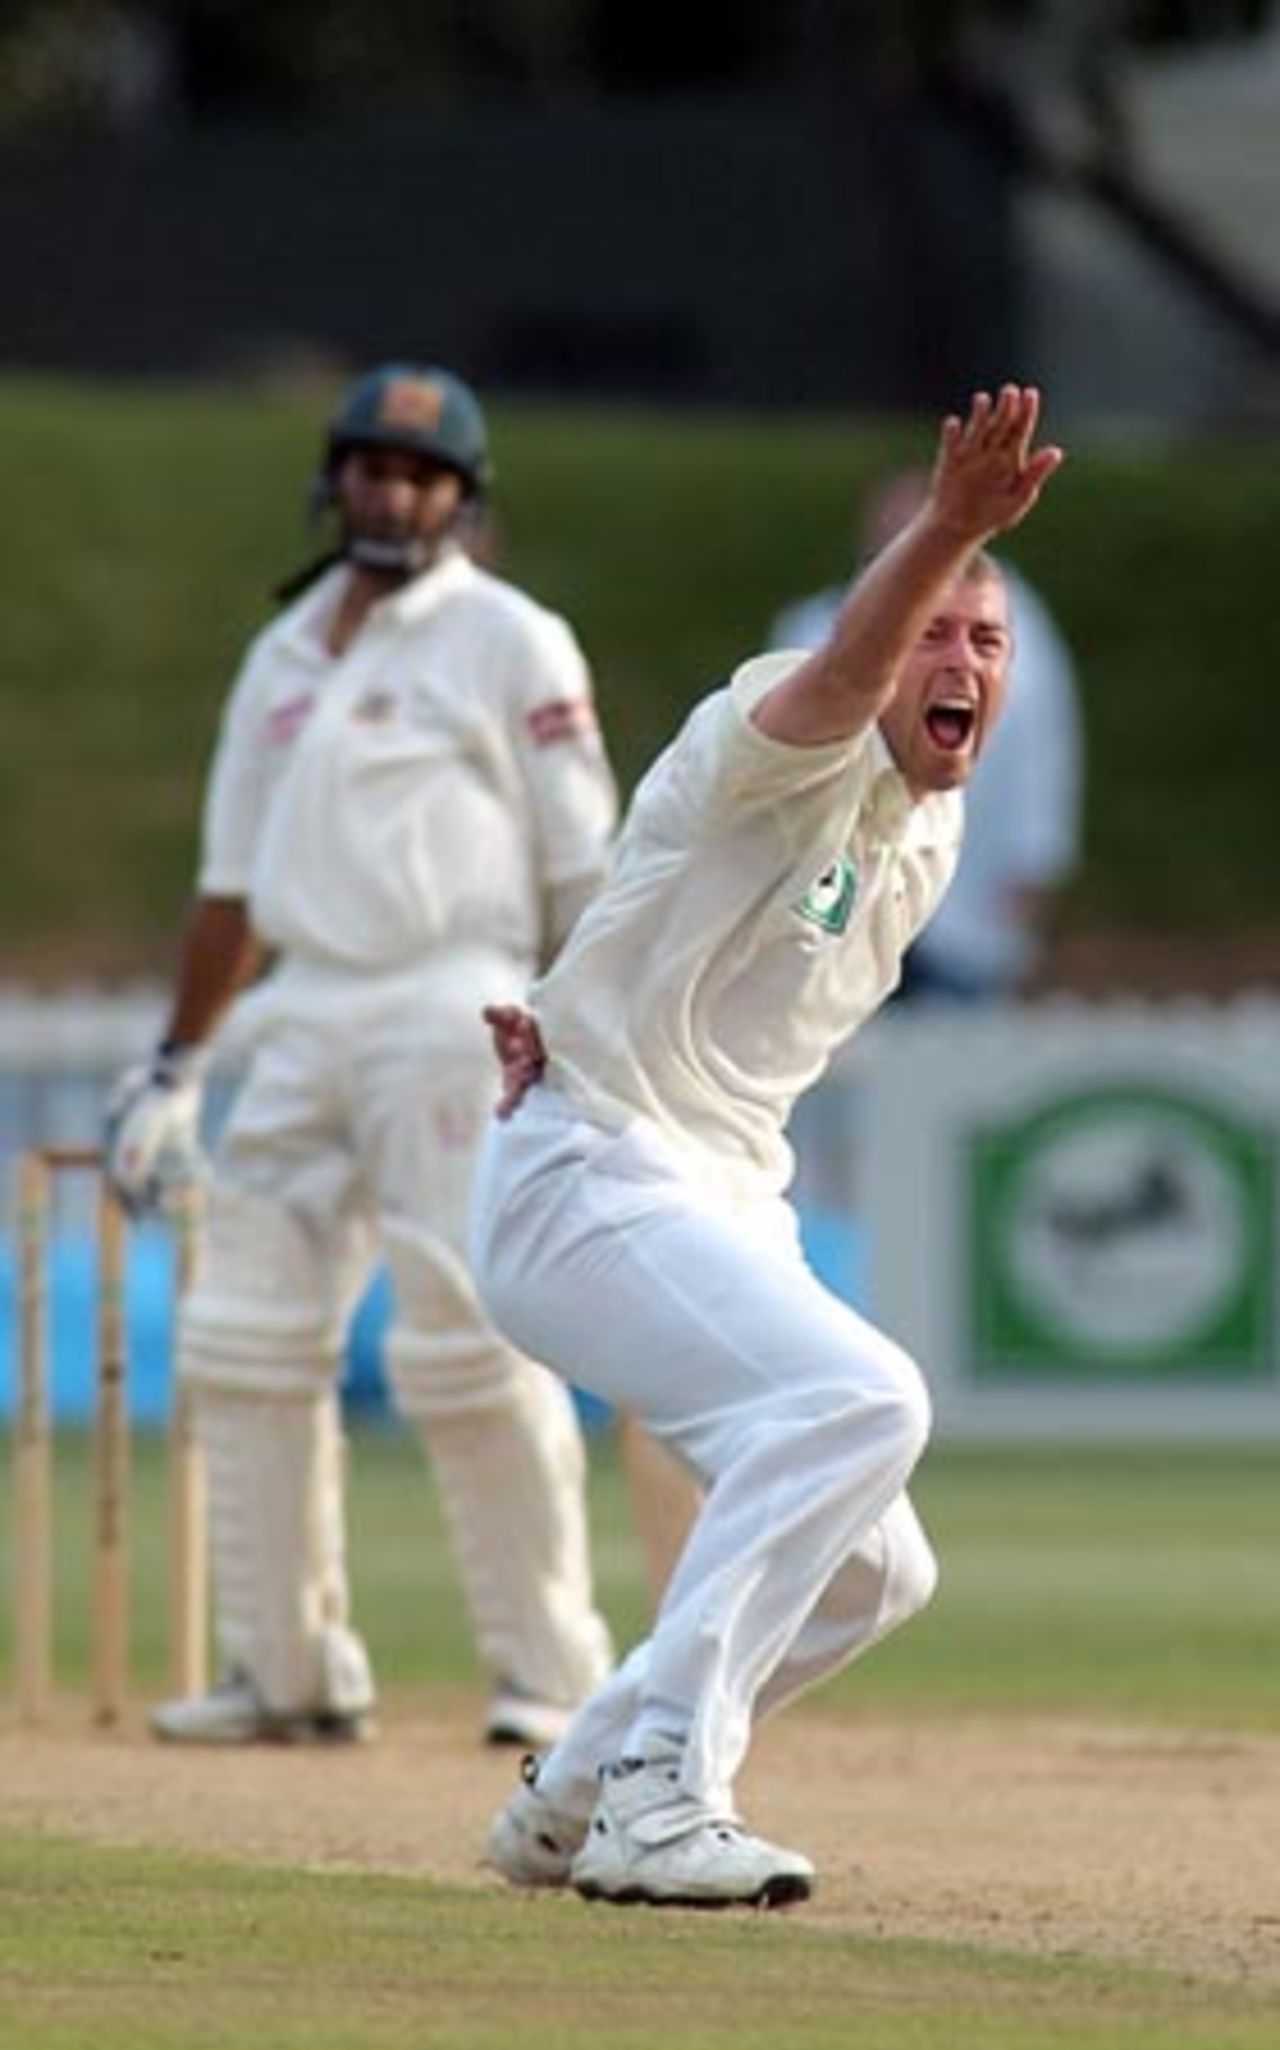 New Zealand bowler Chris Drum successfully appeals for the dismissal of Bangladesh batsman Habibul Bashar, lbw for 32 in his second innings. 2nd Test: New Zealand v Bangladesh at Basin Reserve, Wellington, 26-30 Dec 2001 (29 December 2001).